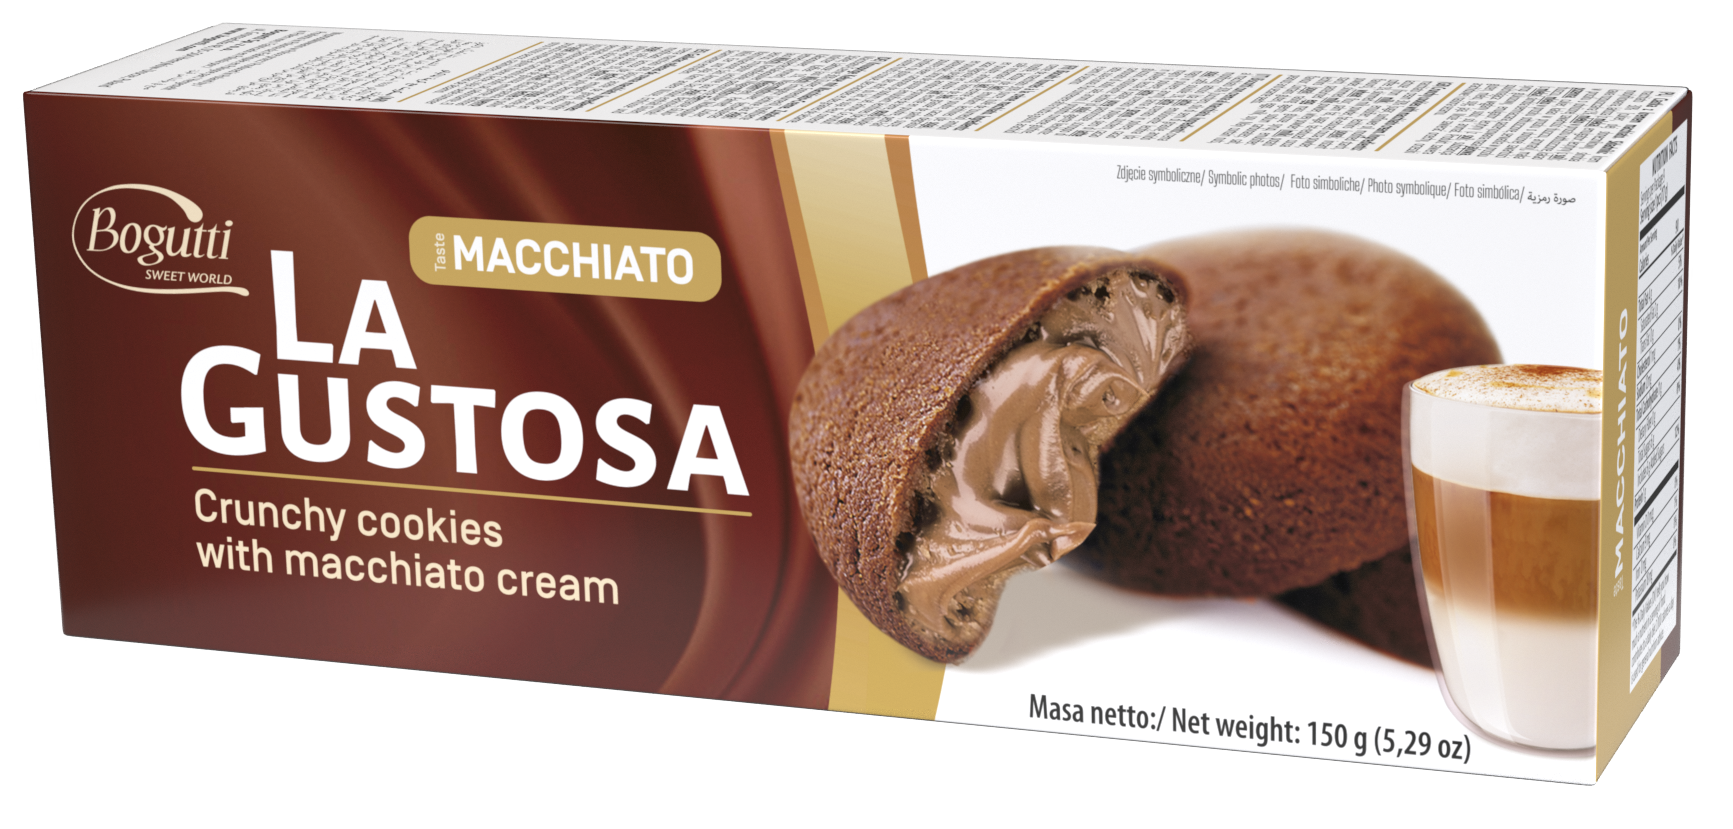 La Gustosa – Biscuits croquants à la crème macchiato